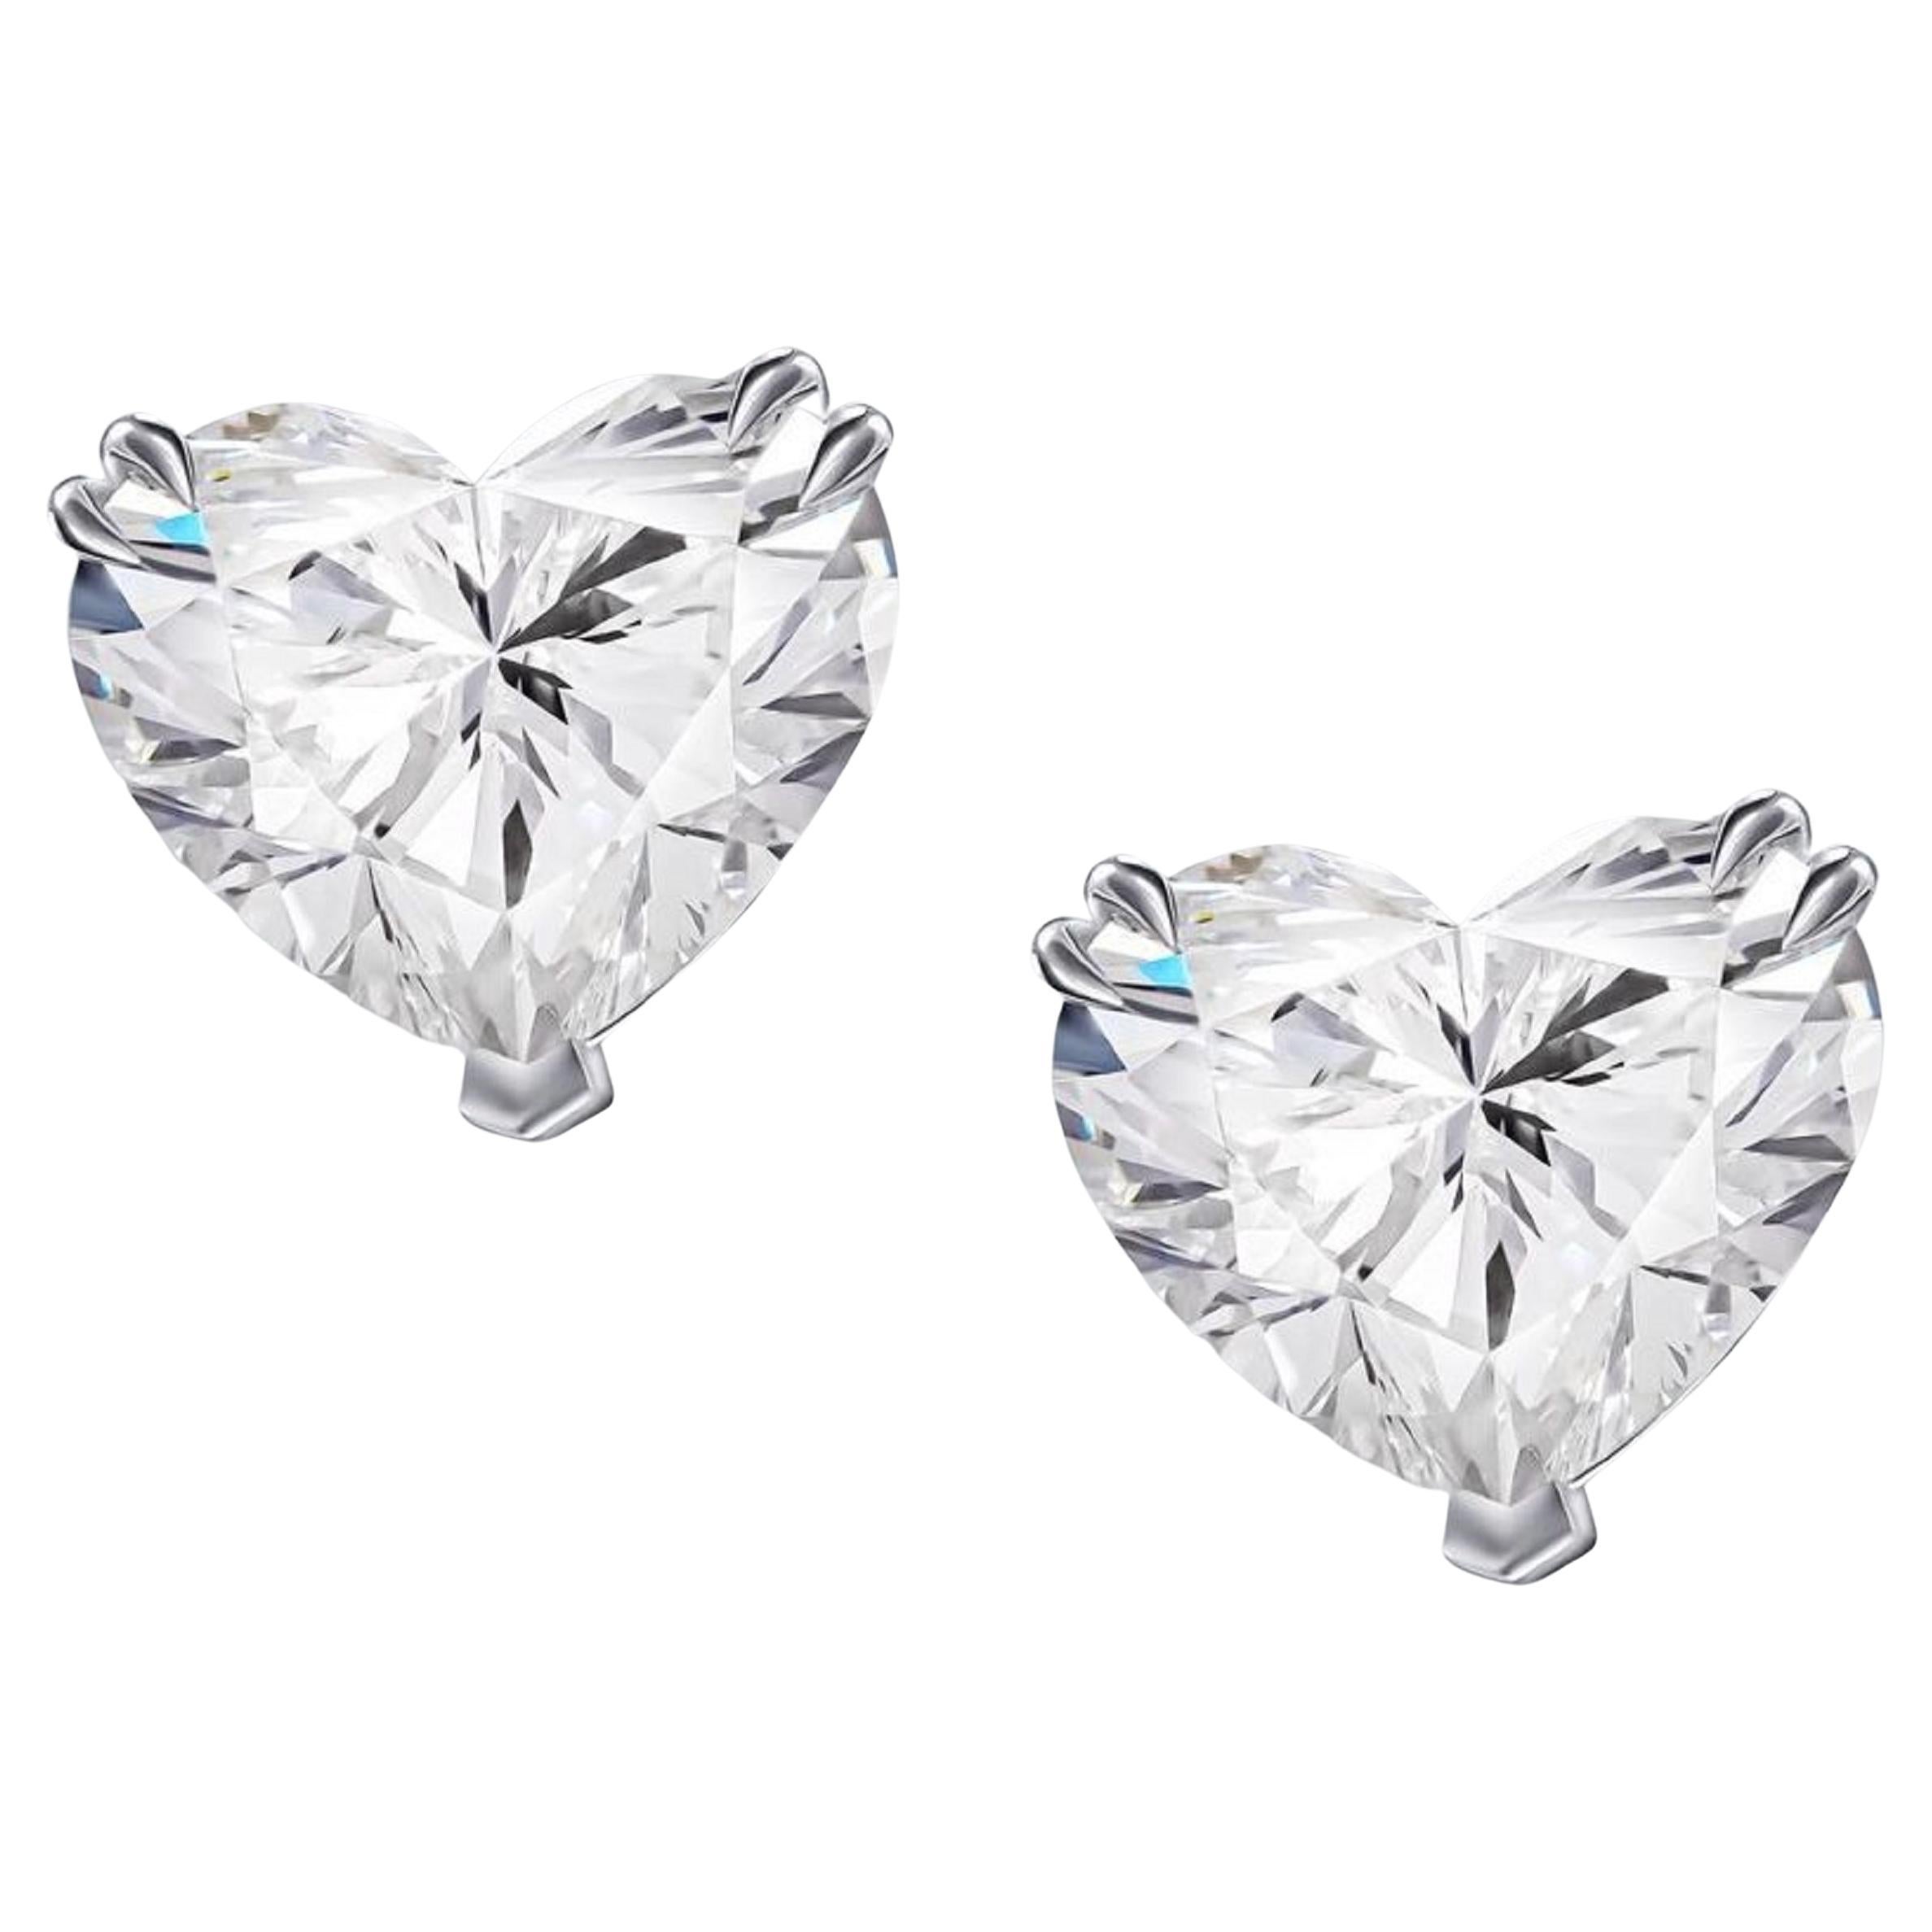 GIA Certified 4 Carat Diamond Earrings D VVS1 Clarity